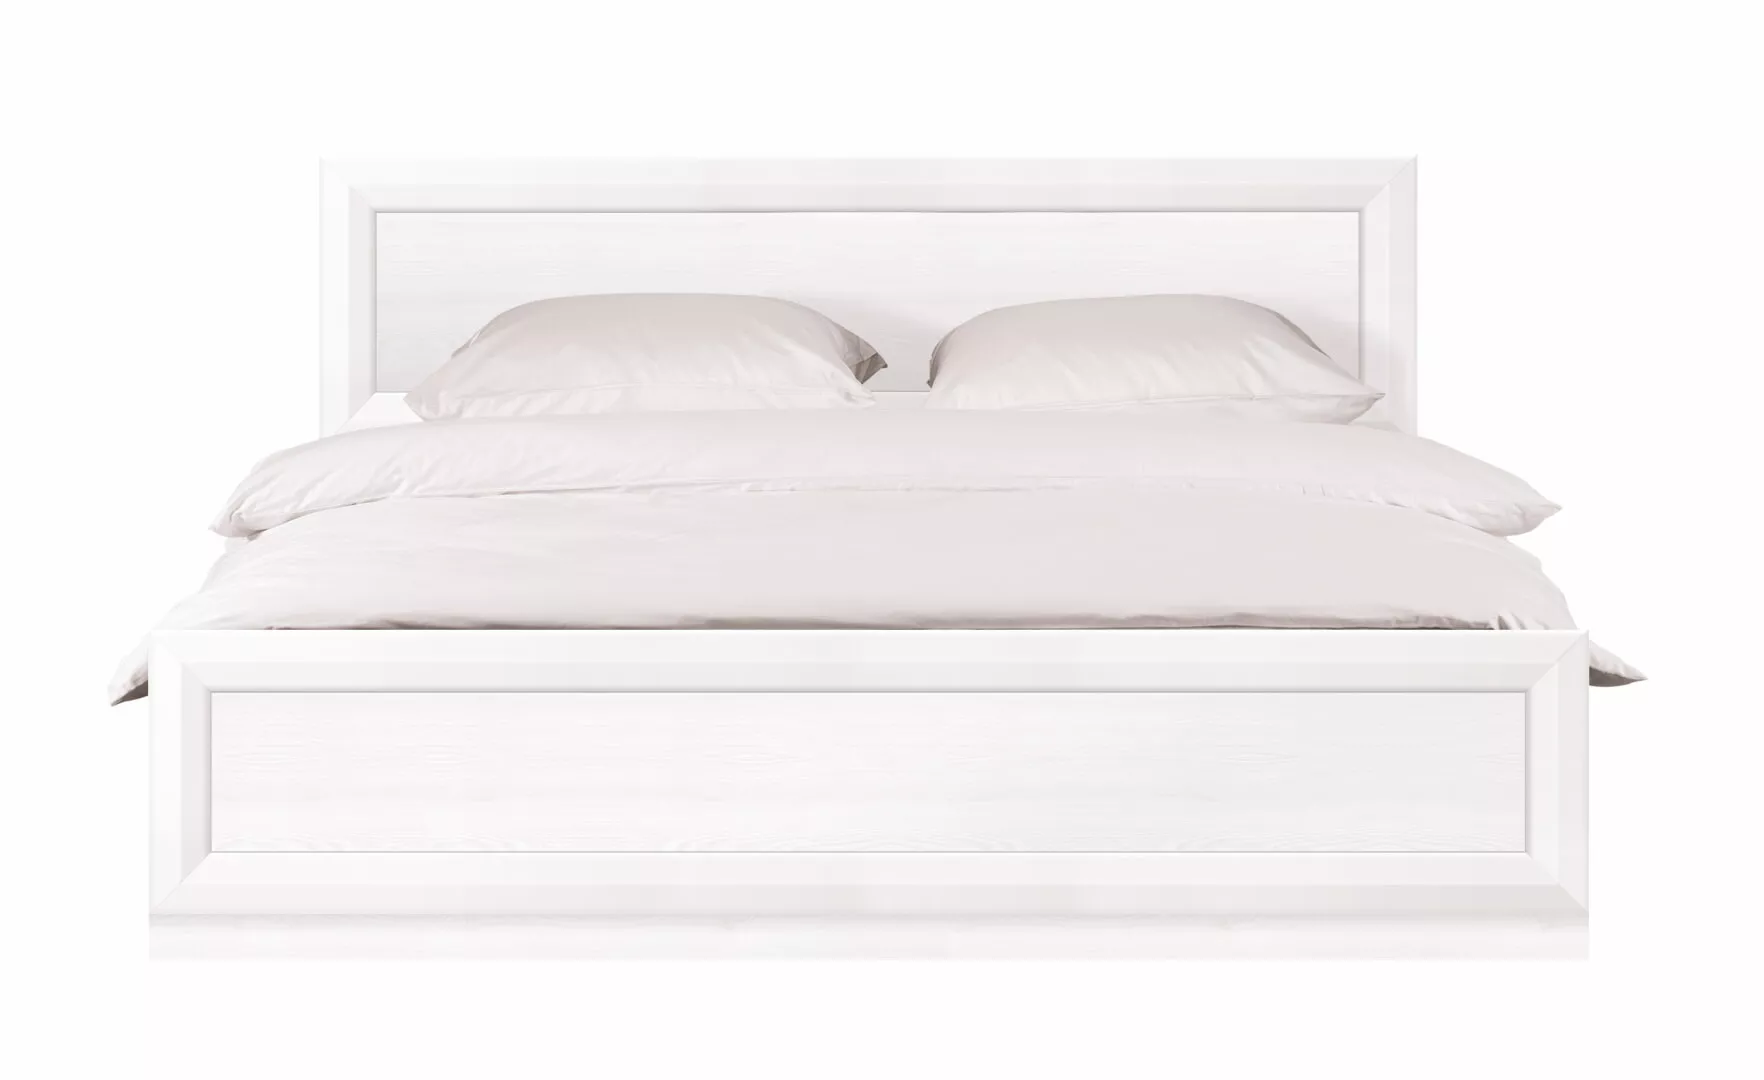 Спальня | Кровати | МАЛЬТА Кровать LOZ 160x200 Мебель ☆ IDEA в Севастополе| BRW, Брест anons